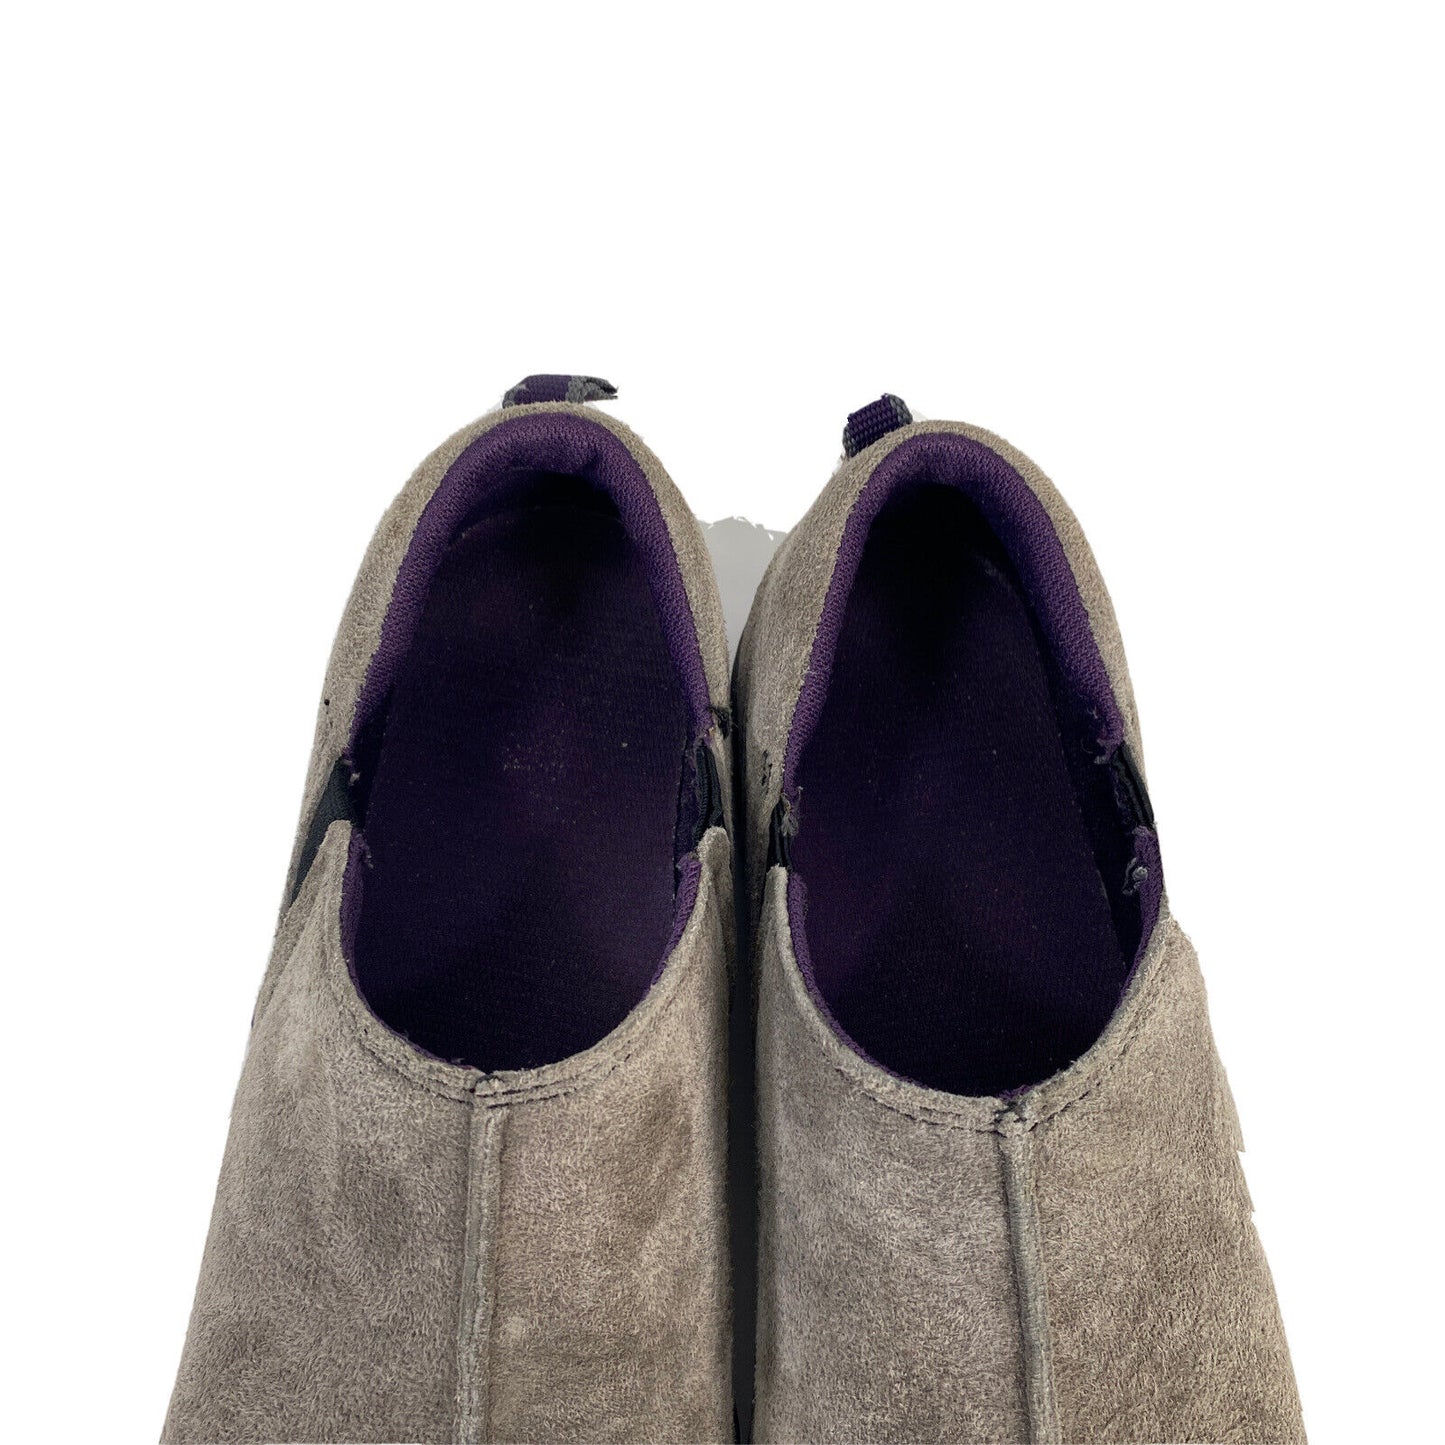 Duluth Trading Women's Gray Suede Steel Creek Moc Comfort Shoes Sz 7